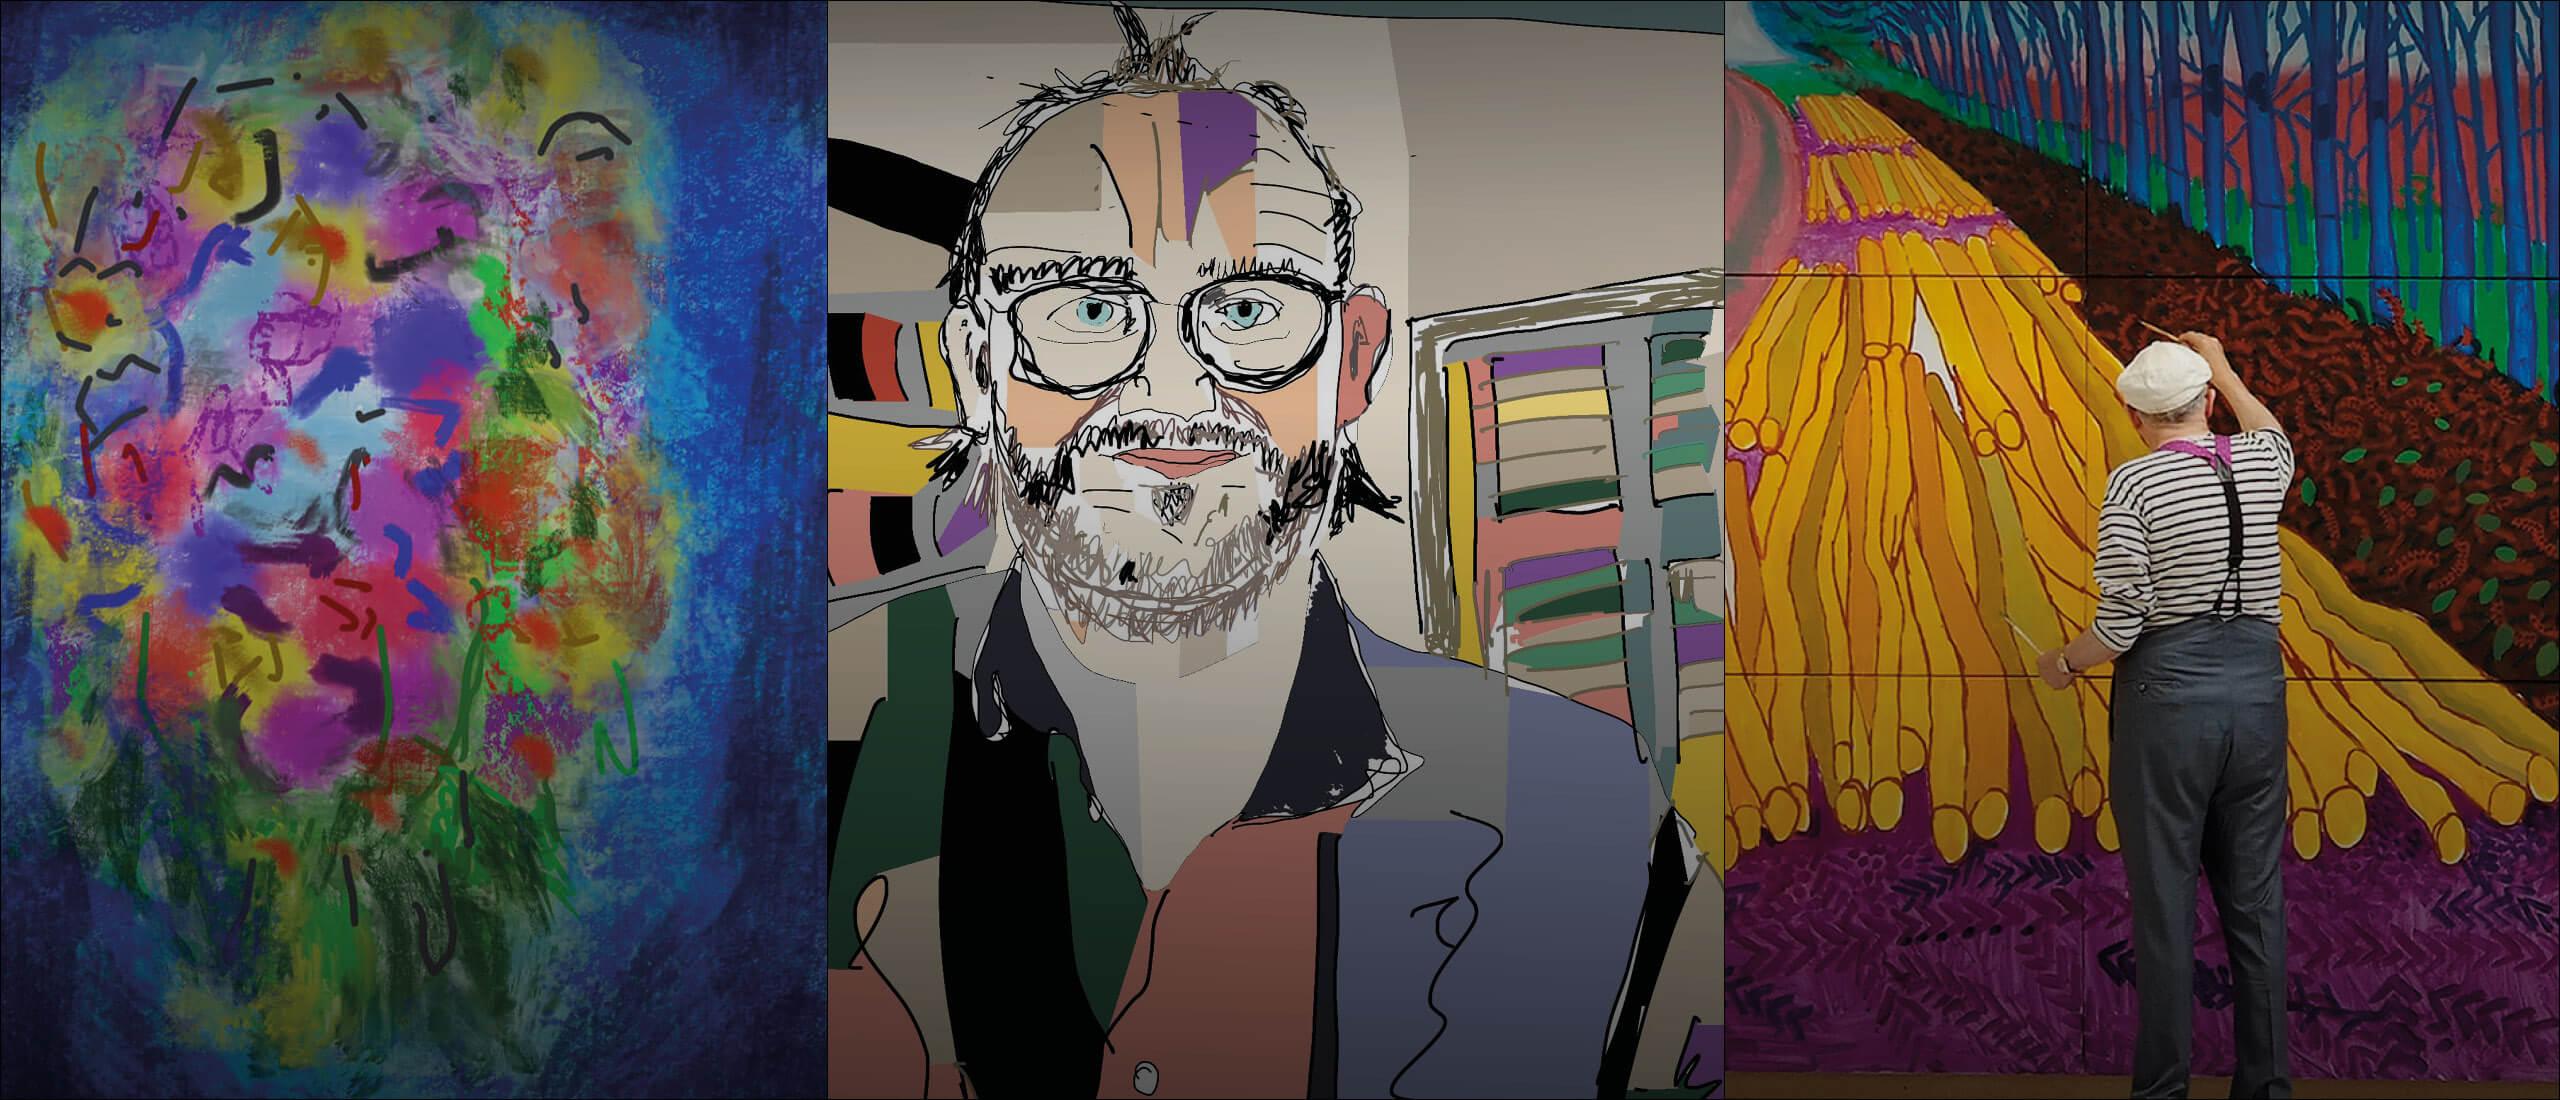 Image featuring three iPad-creating artists; David Hockney, Kalle Wetterström and Jakob Olsen